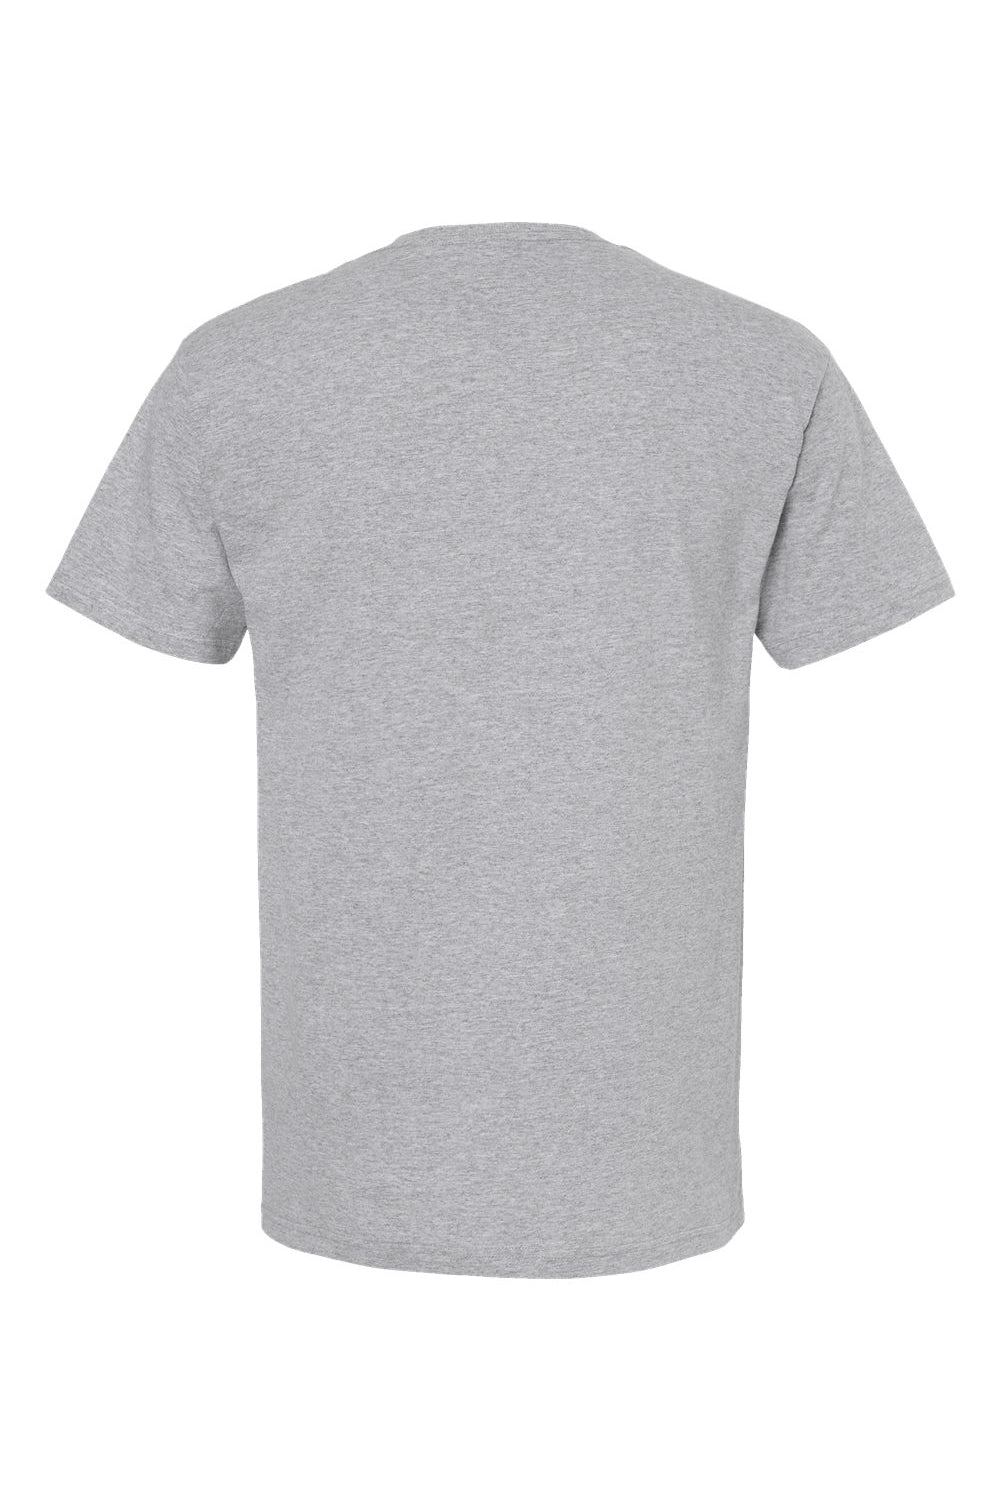 M&O 4800 Mens Gold Soft Touch Short Sleeve Crewneck T-Shirt Athletic Grey Flat Back